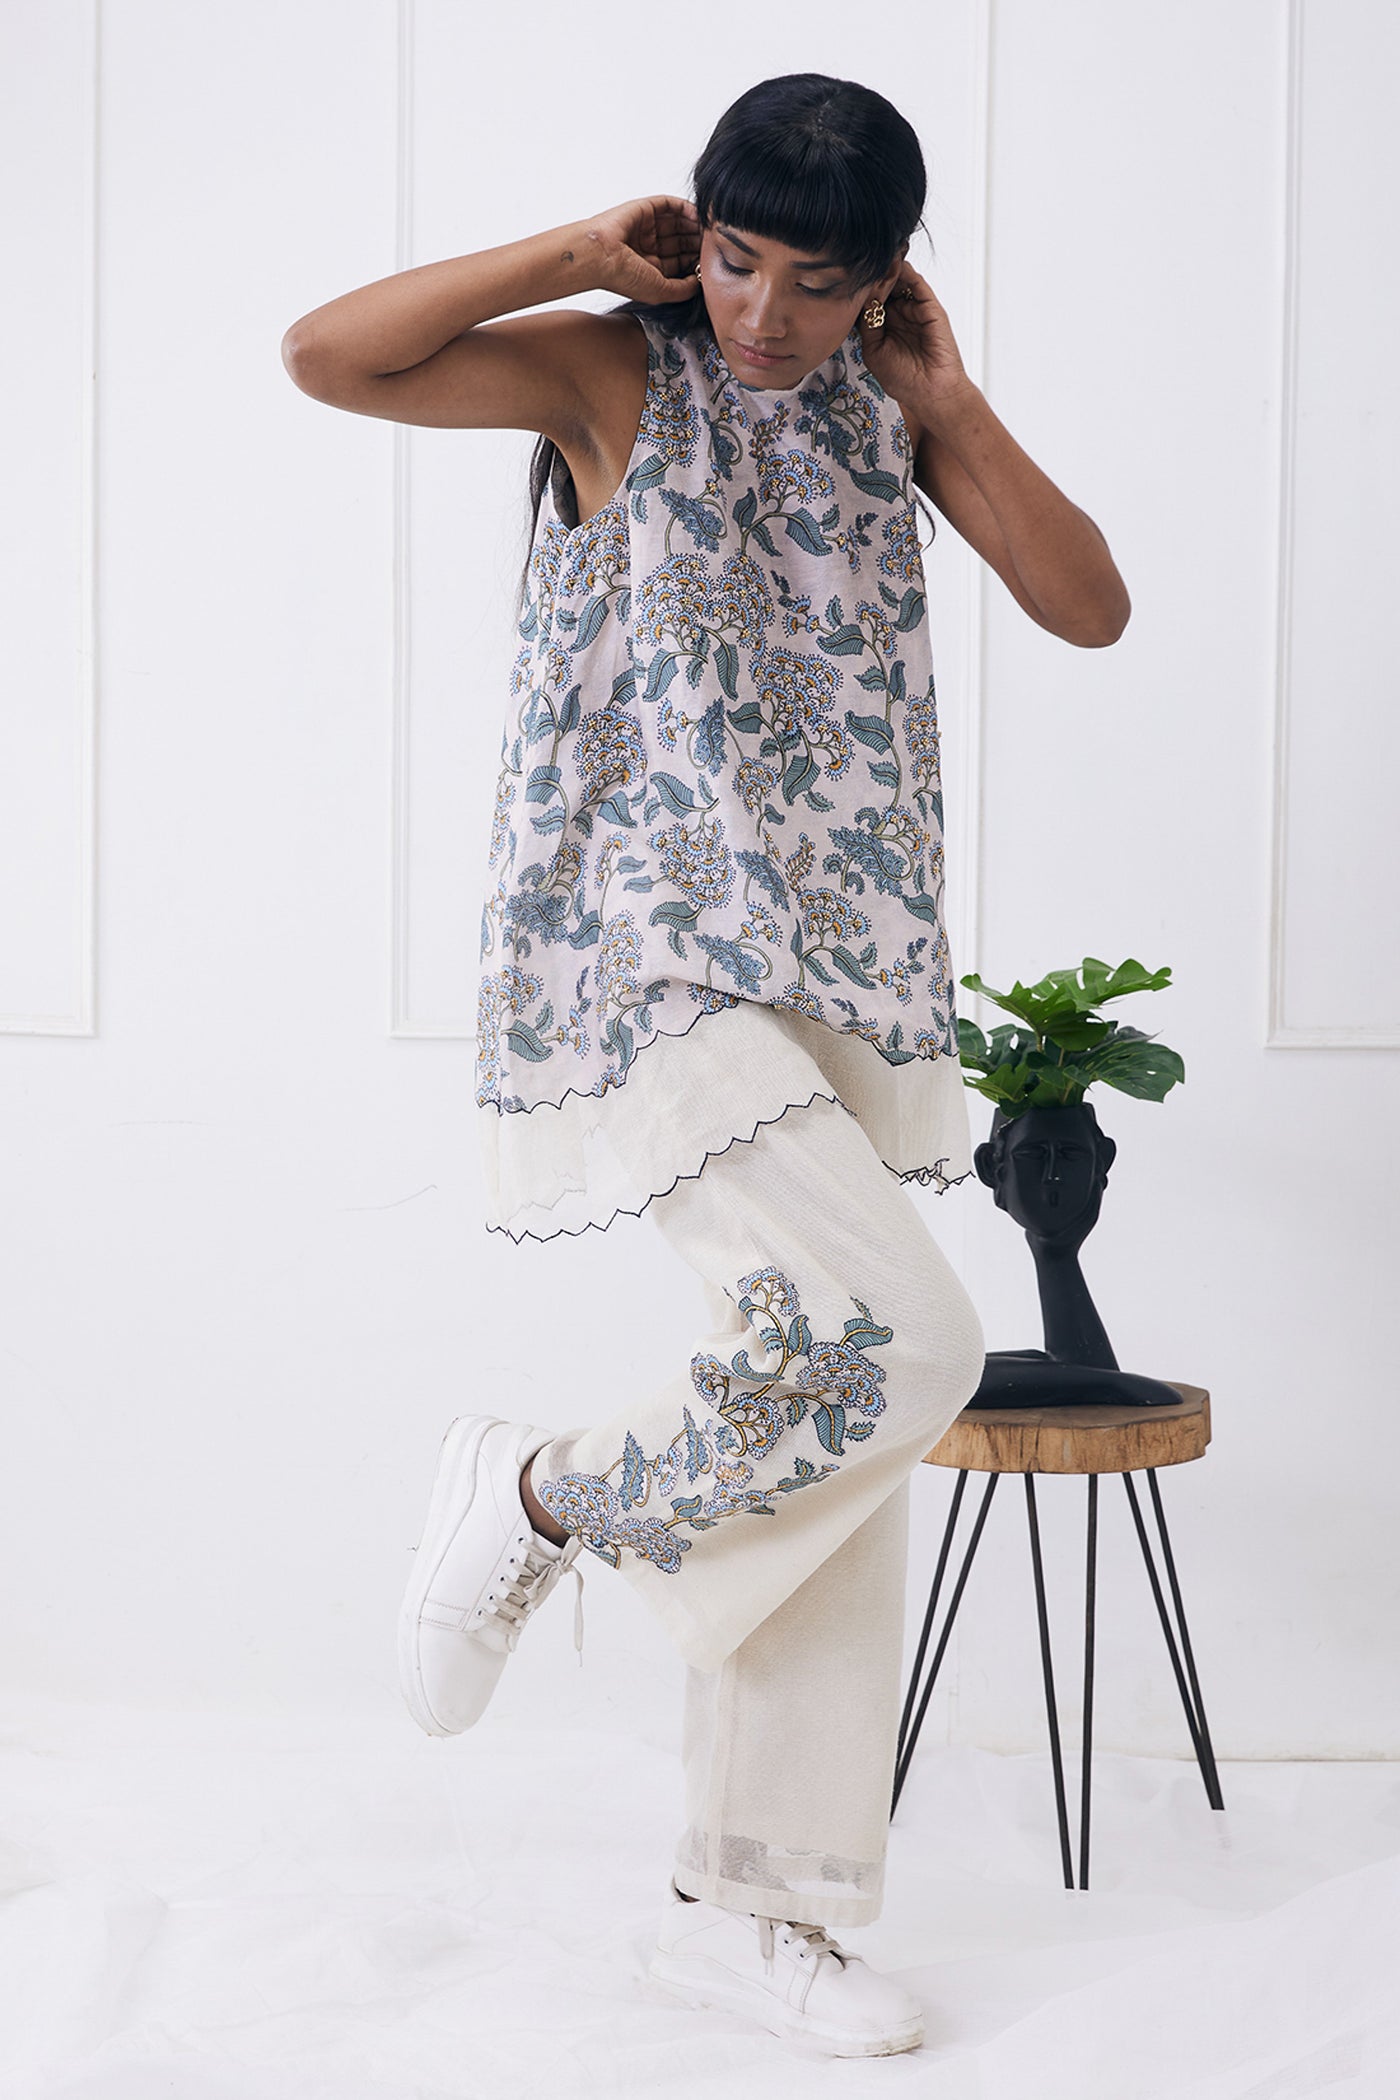 sougat paul Yasmin Printed Co-ord set cream online shopping melange singapore indian designer wear